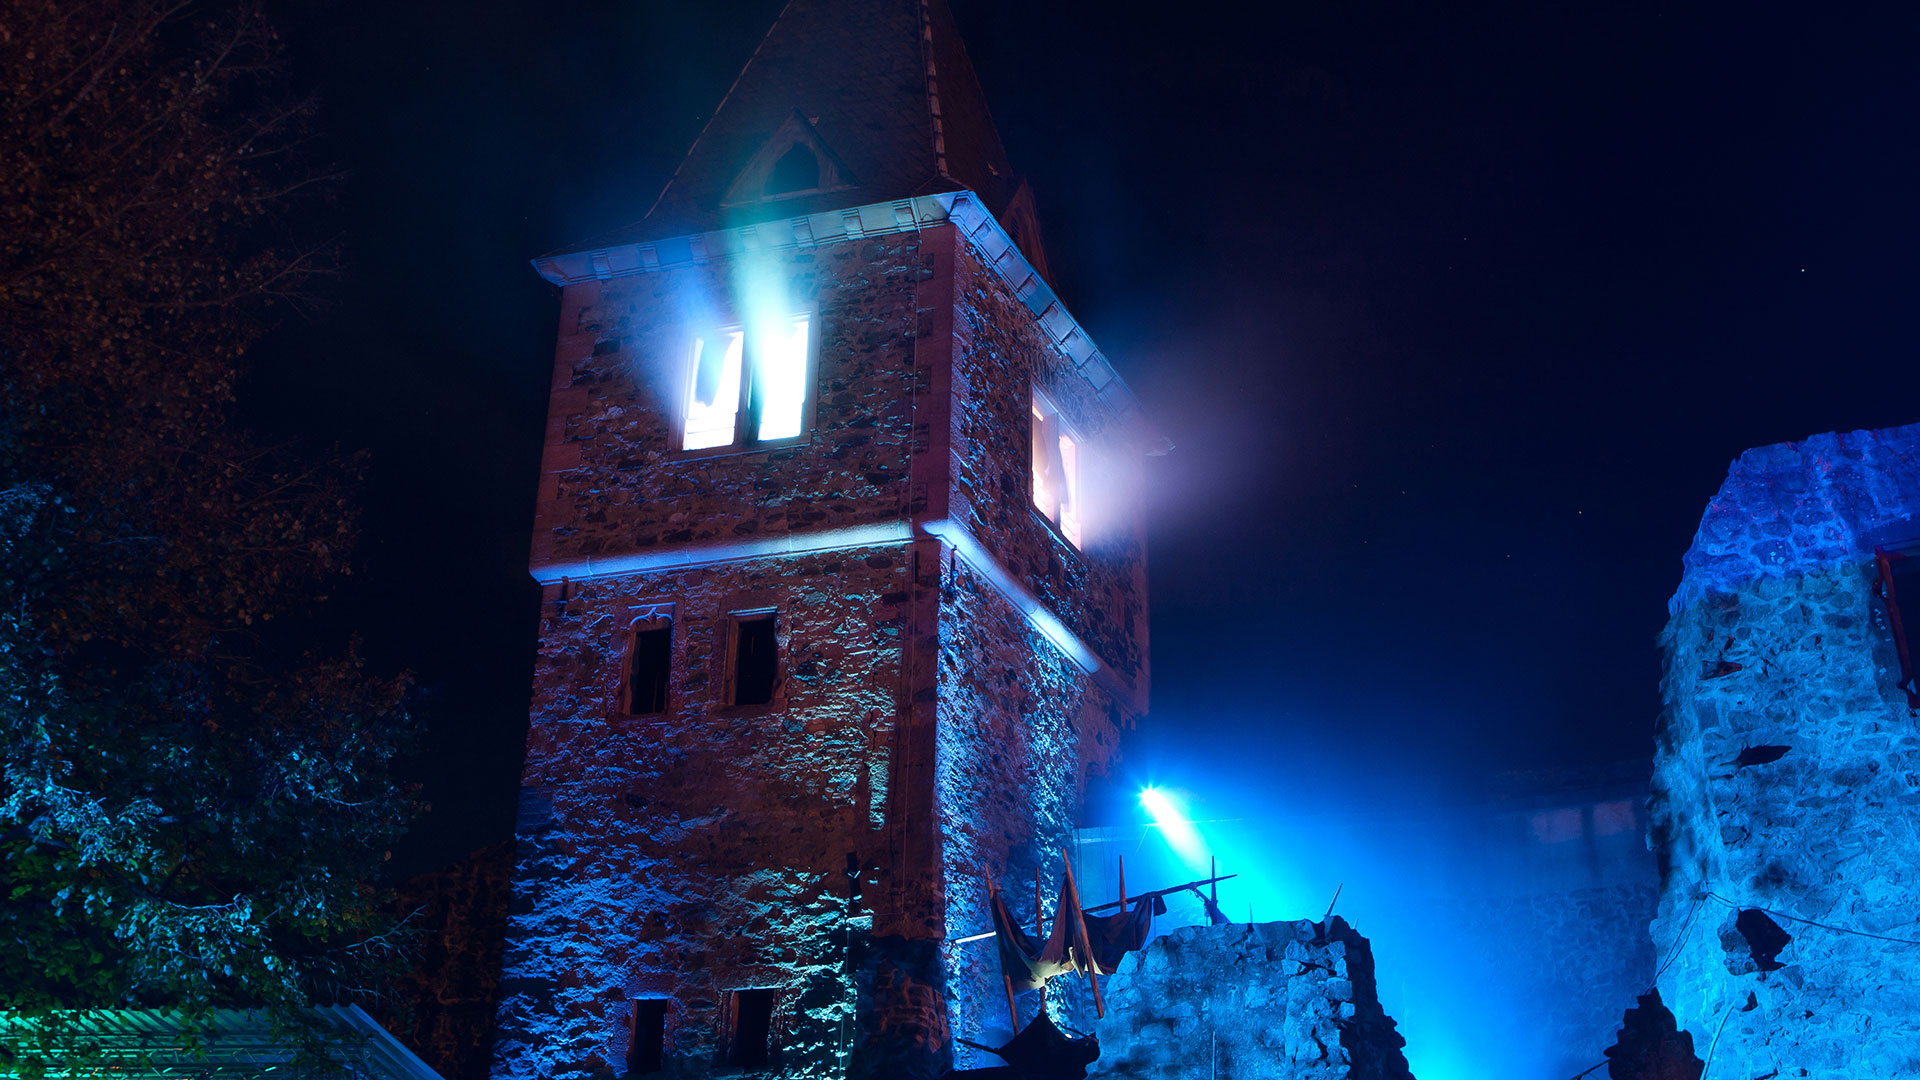 Рыцарский замок франкенштейн в германии - легенда | замки и крепости | багира гуру